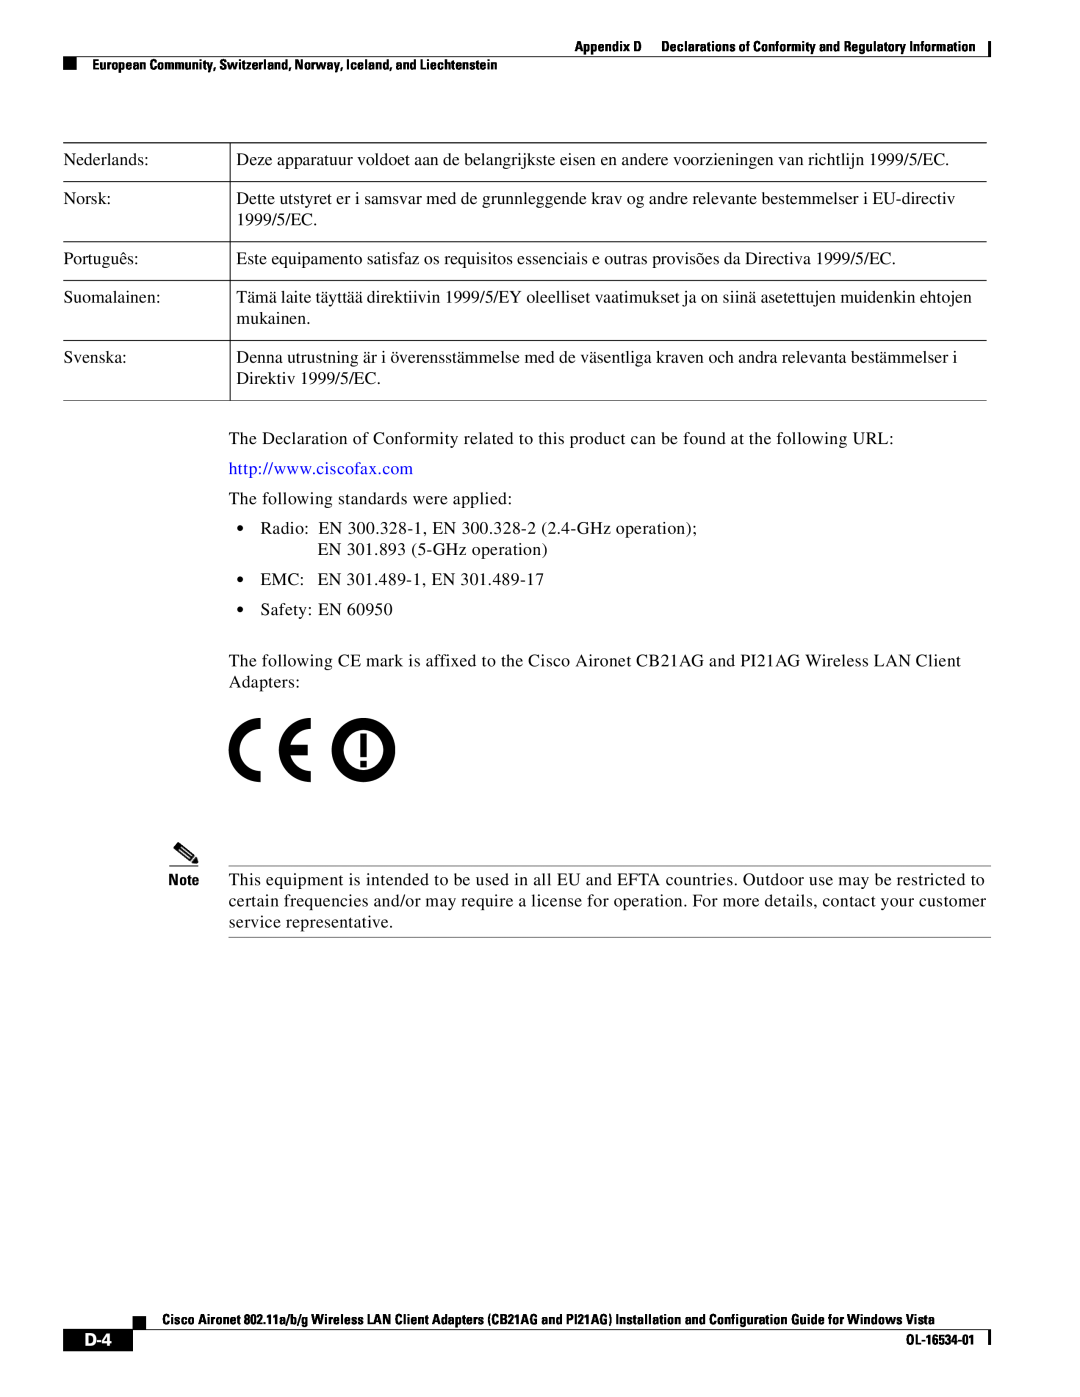 Cisco Systems PI21AG, CB21AG manual 